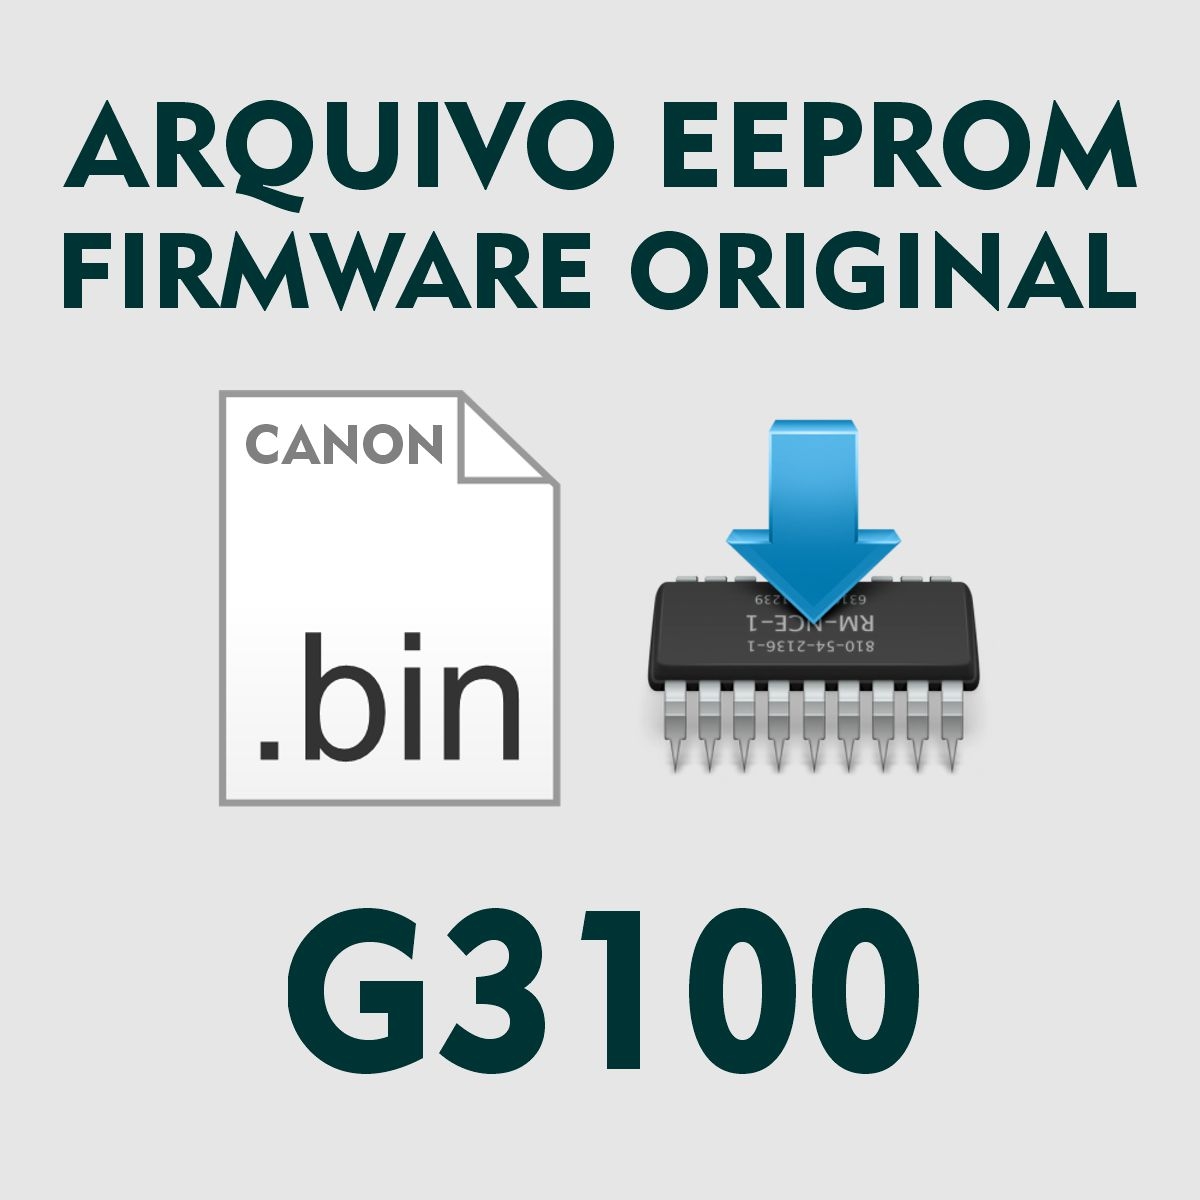 Canon G3100 | Arquivo de Eeprom Firmware .bin - Original